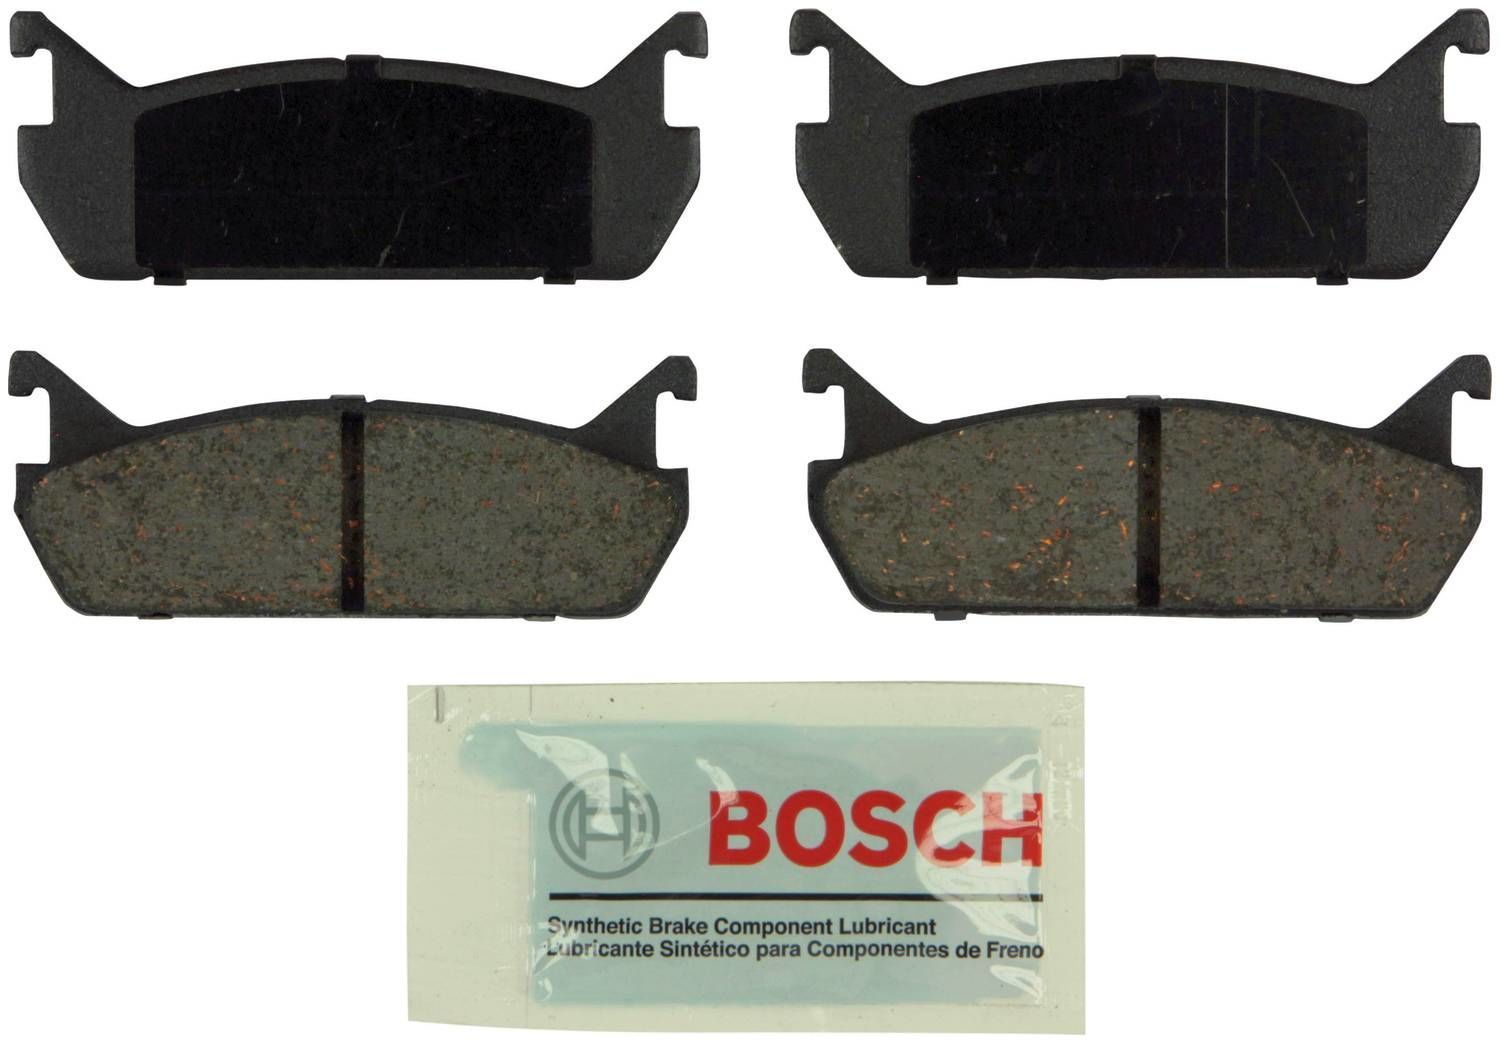 BOSCH BRAKE - Bosch Blue Brake Pads - BQC BE458